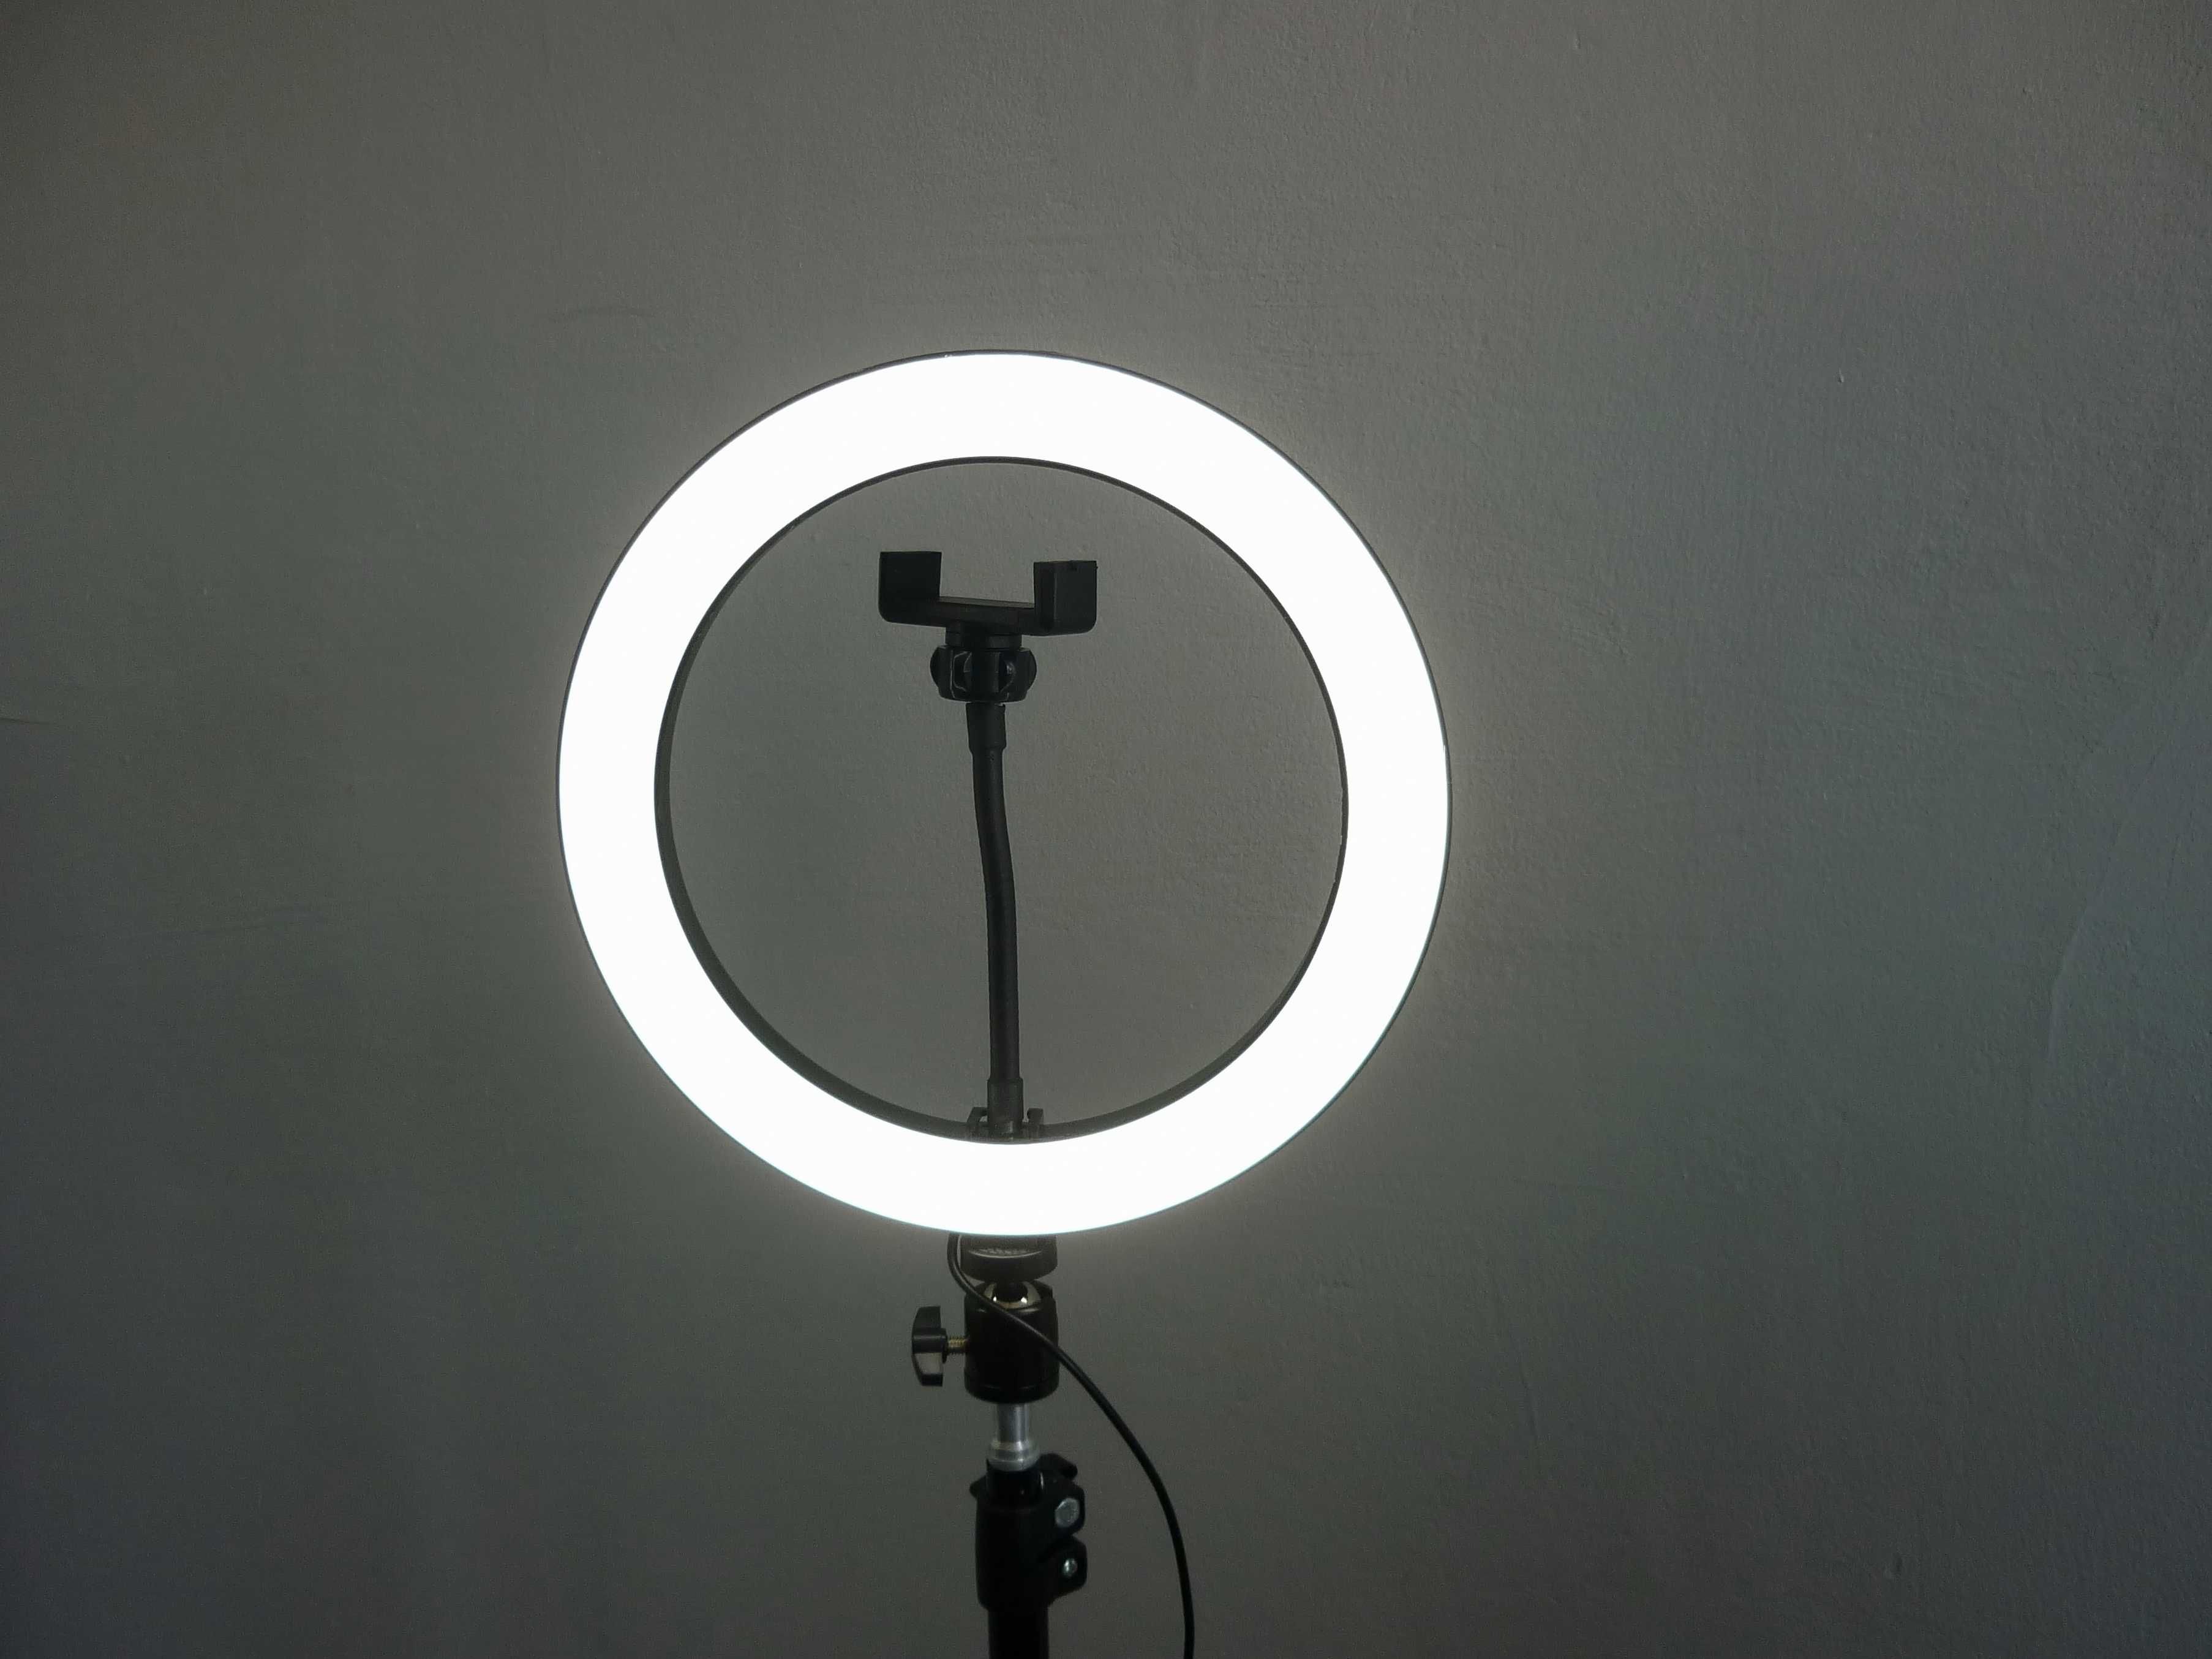 Кольцевая LED лампа LC-30, Селфи кольцо 26 см с тремя режимами